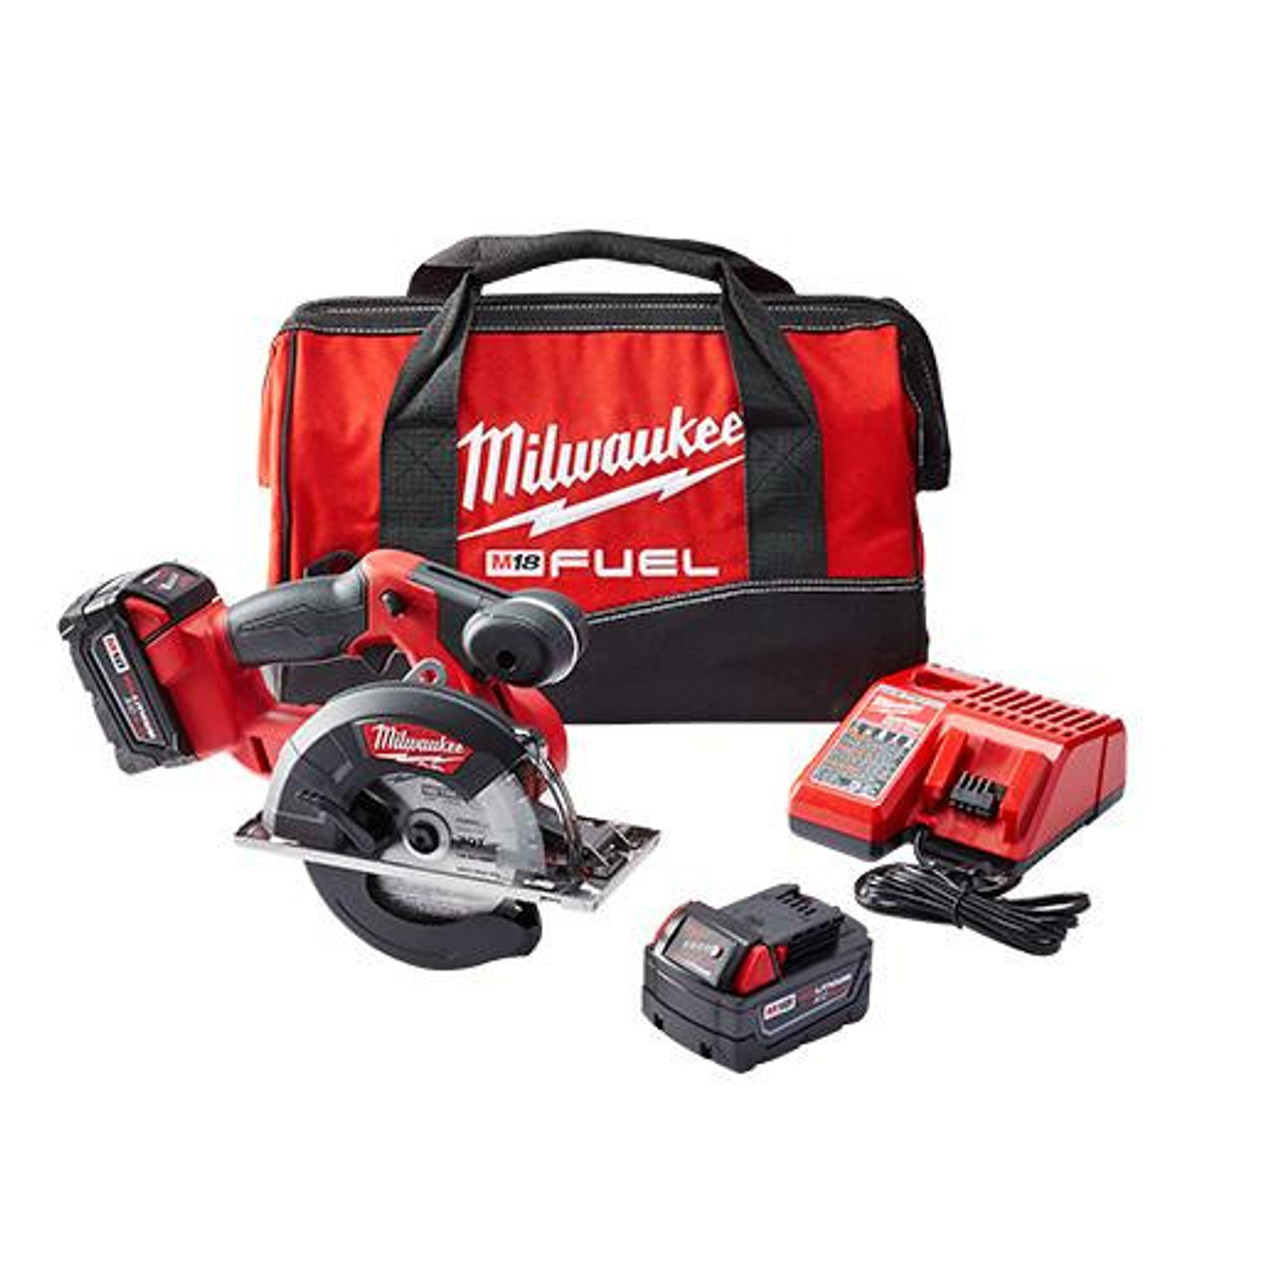 Milwaukee M18 Fuel Cordless Power Tools - Milwaukee Power Tools